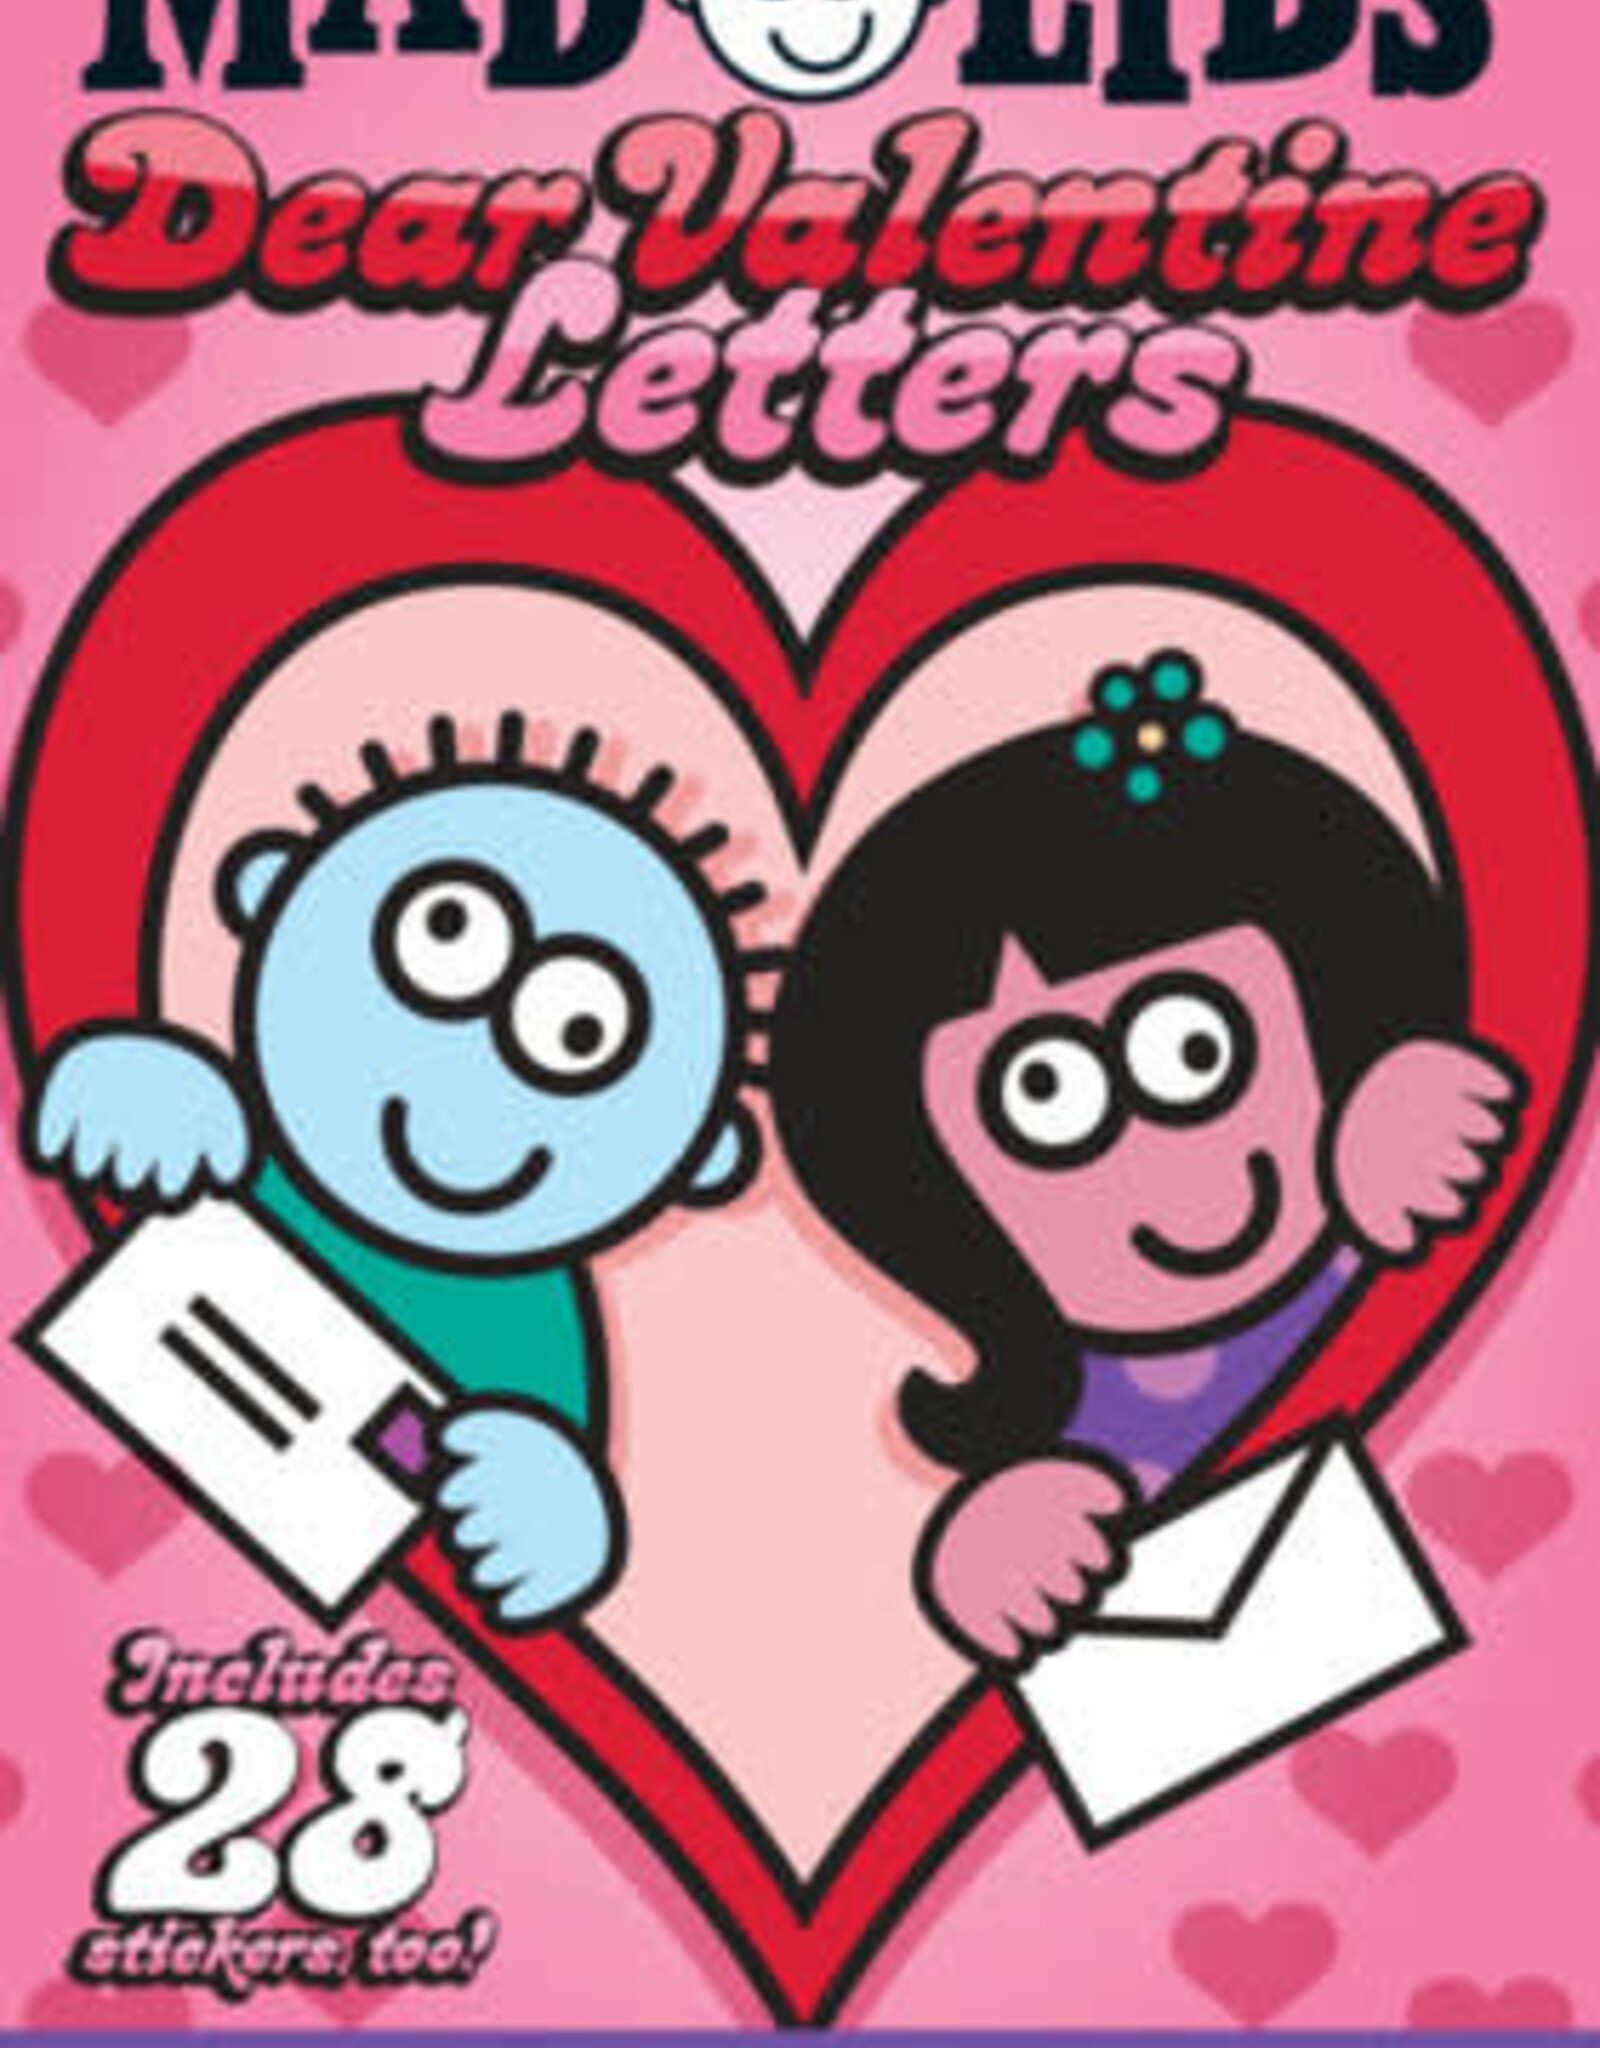 Random House/Penguin Dear Valentine Letters Mad Libs